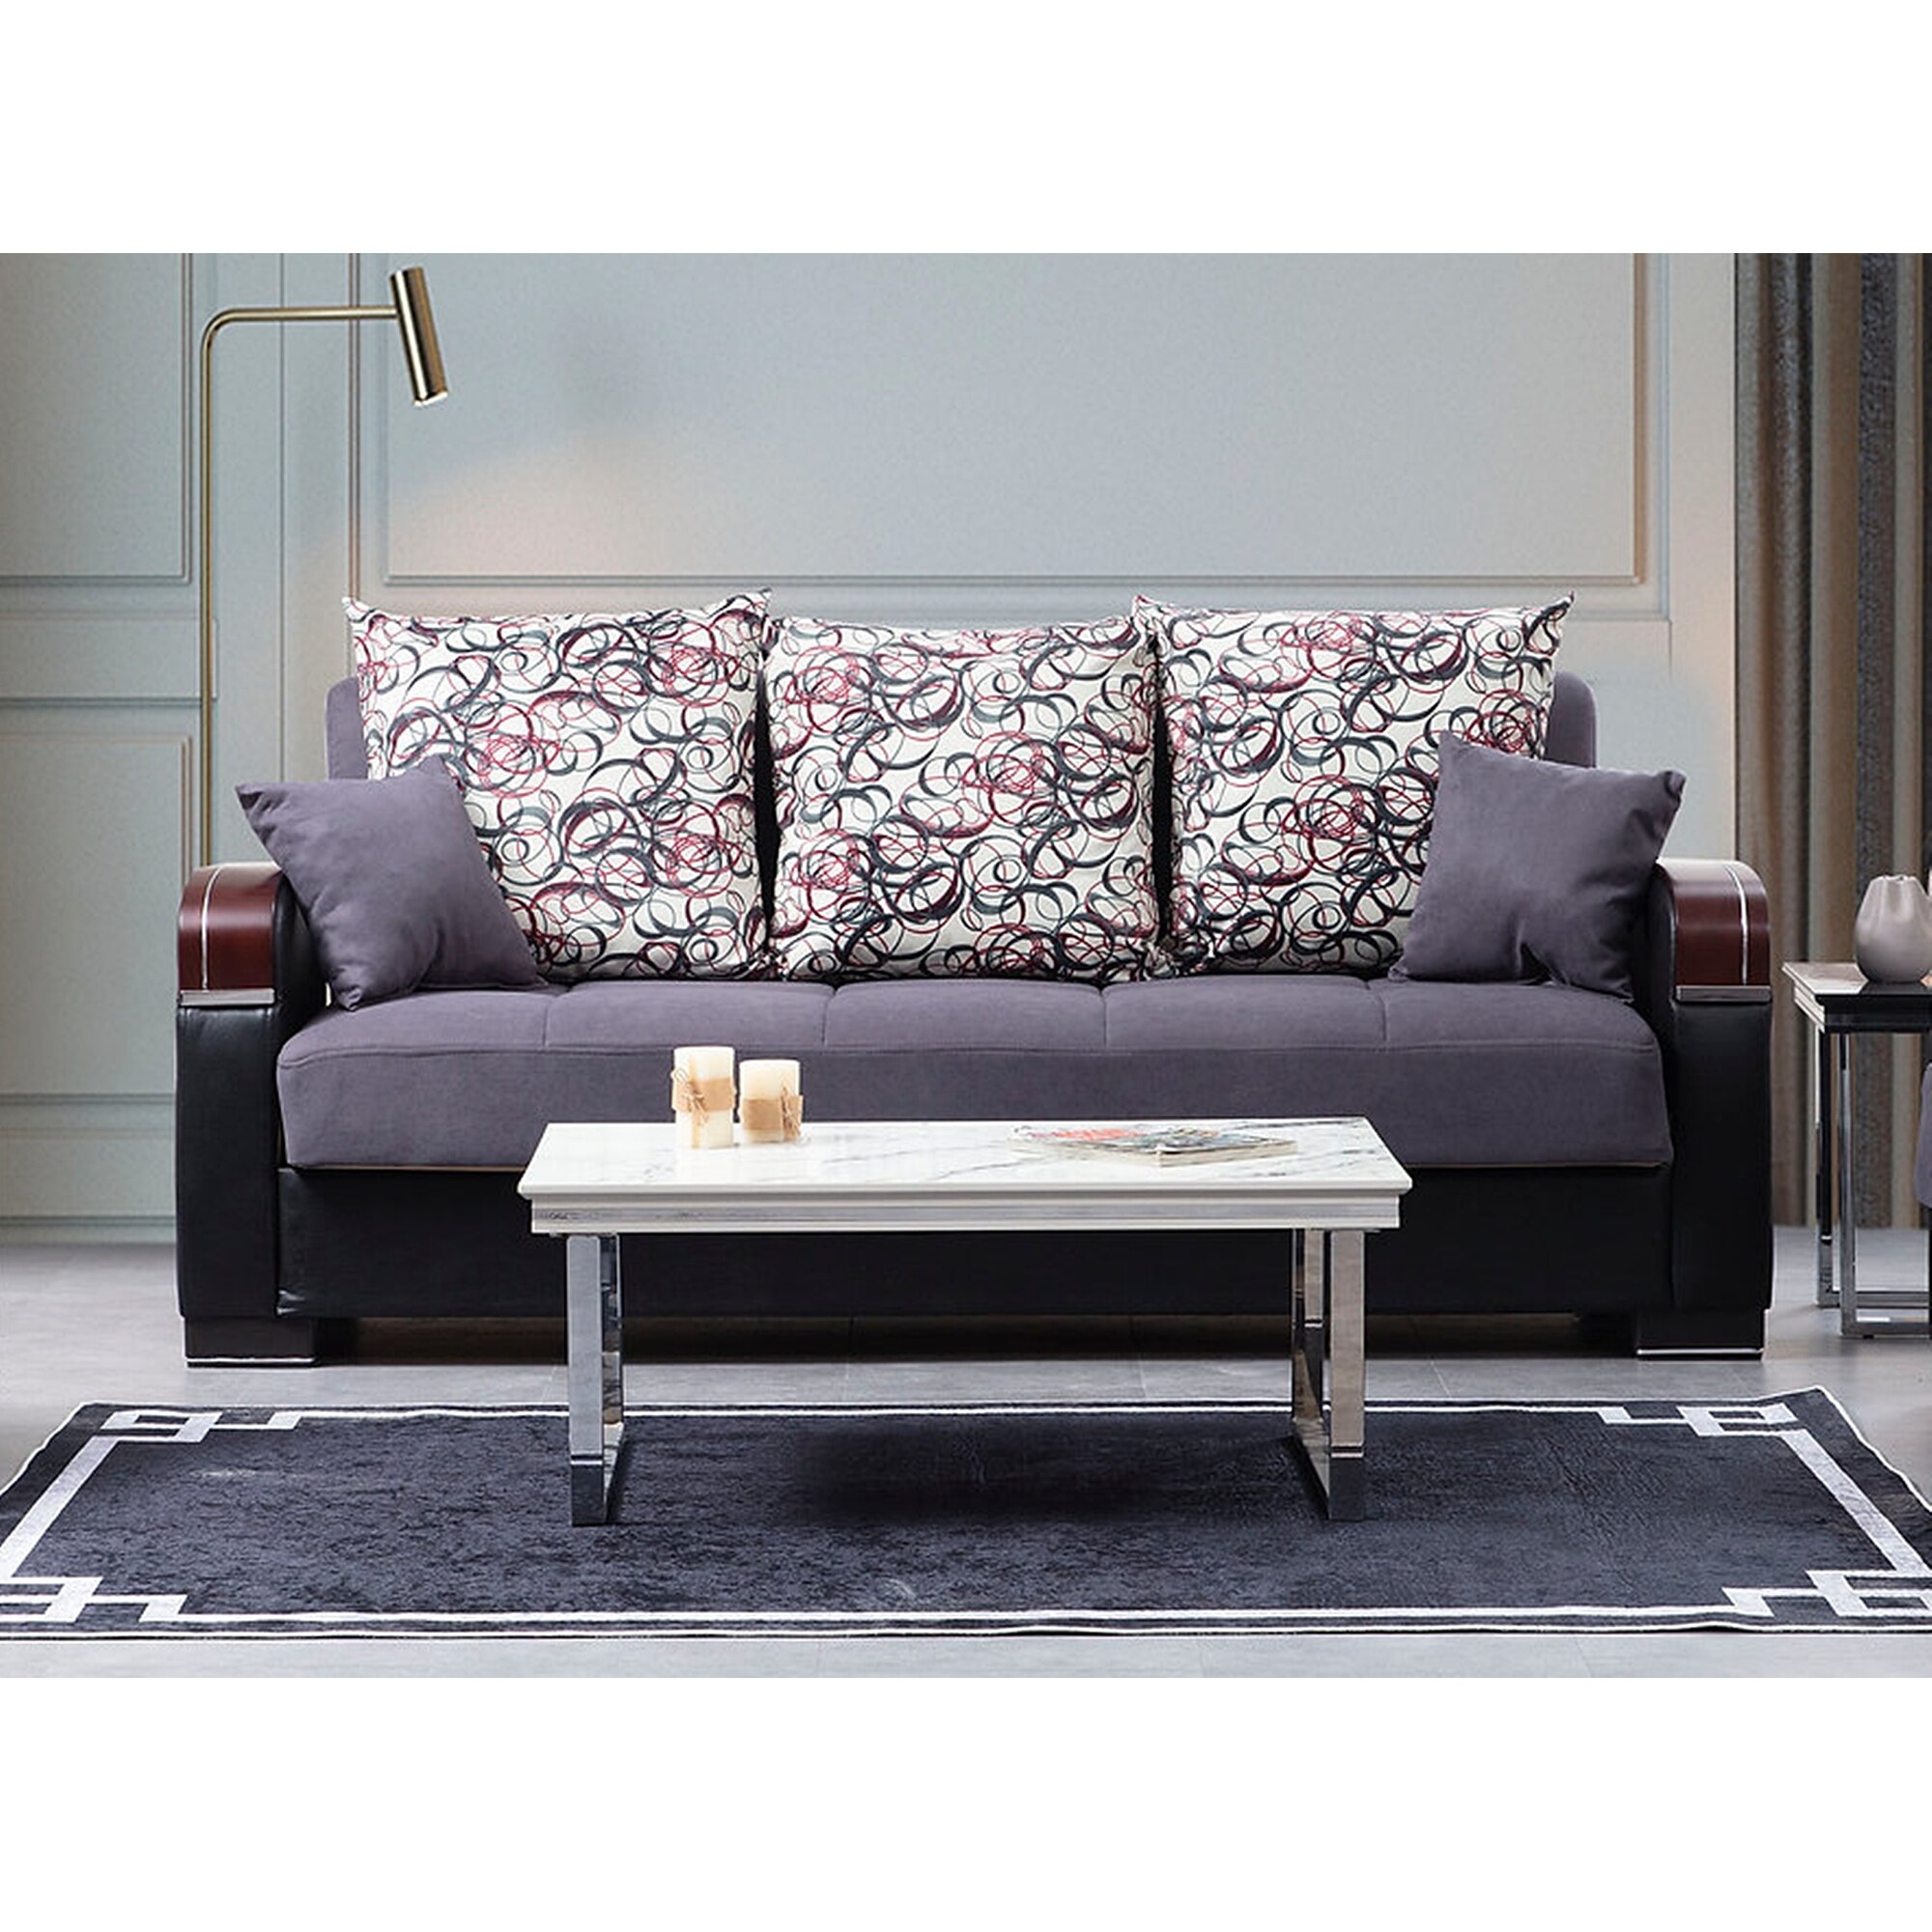 Tulsa Grey Fabric-Leather Upholstered Convertible Sleeper Sofa with Storage